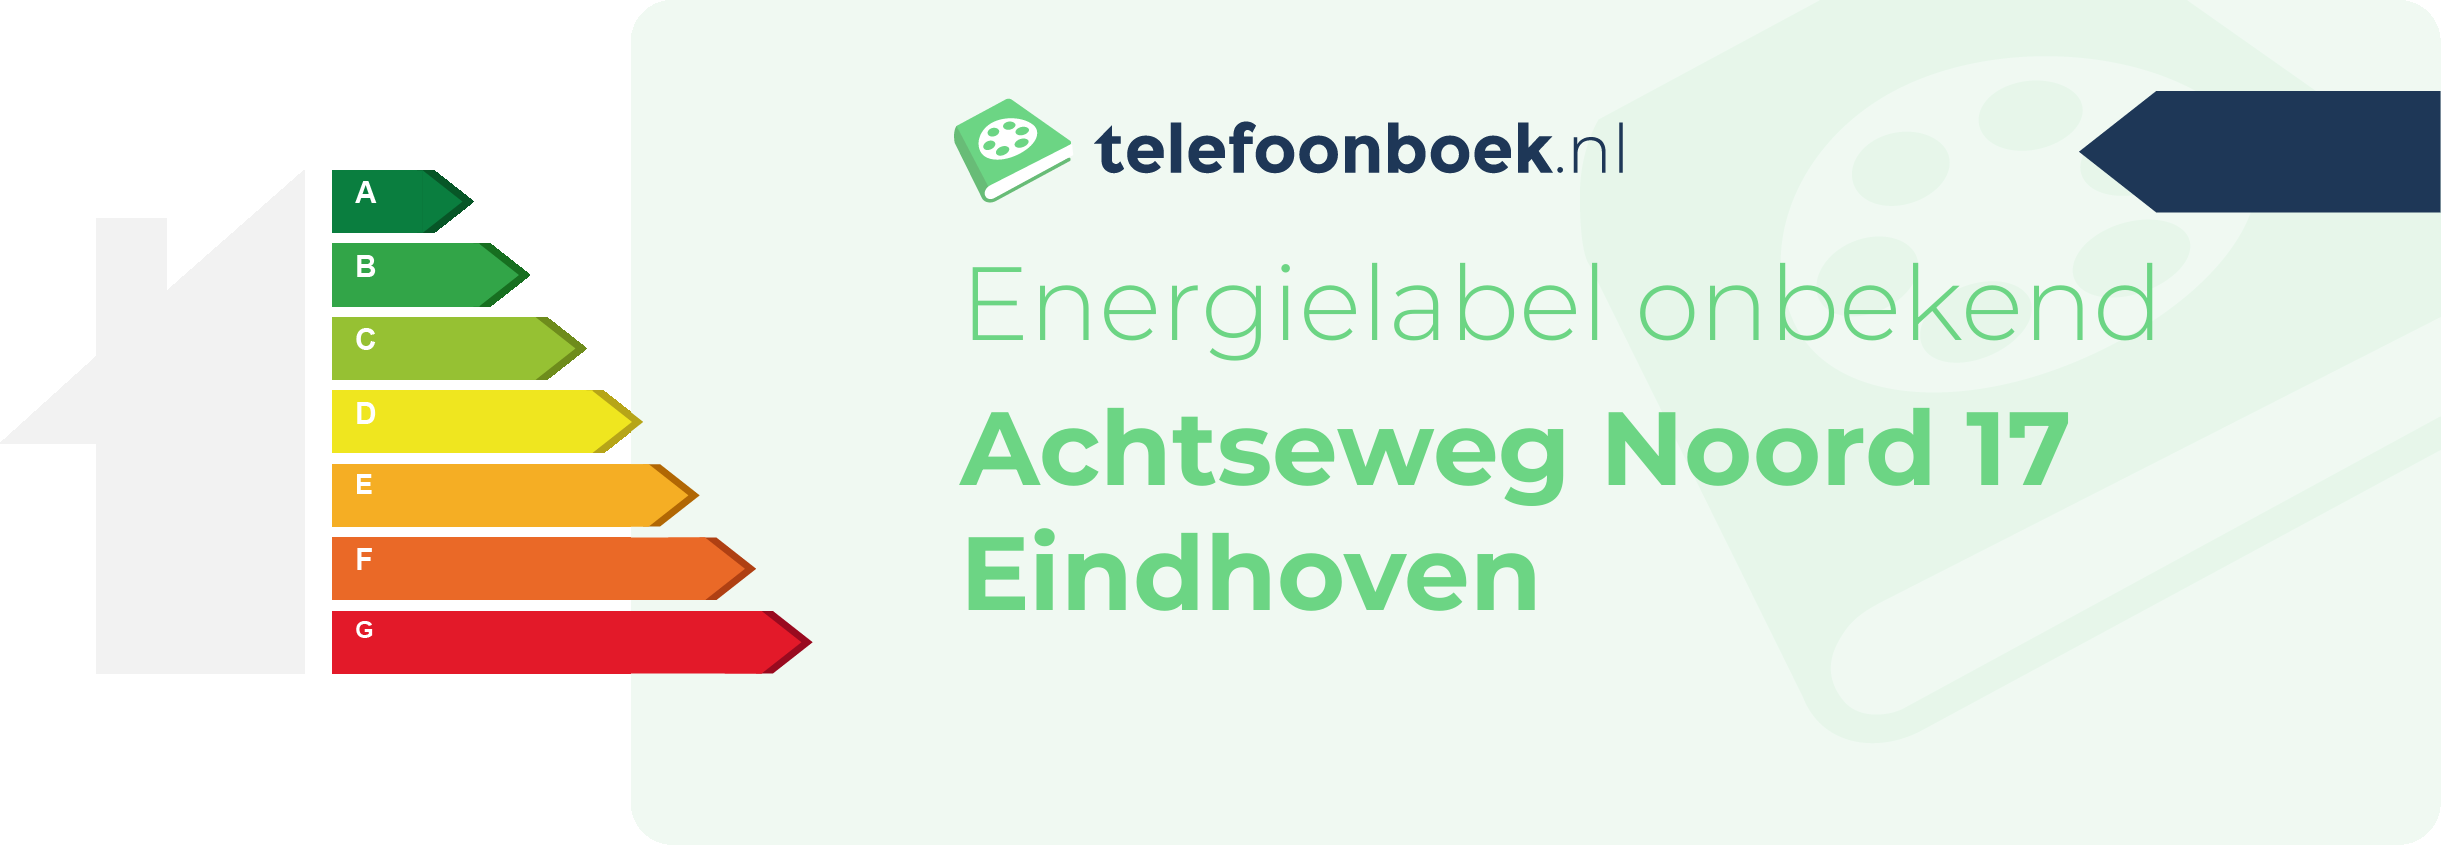 Energielabel Achtseweg Noord 17 Eindhoven